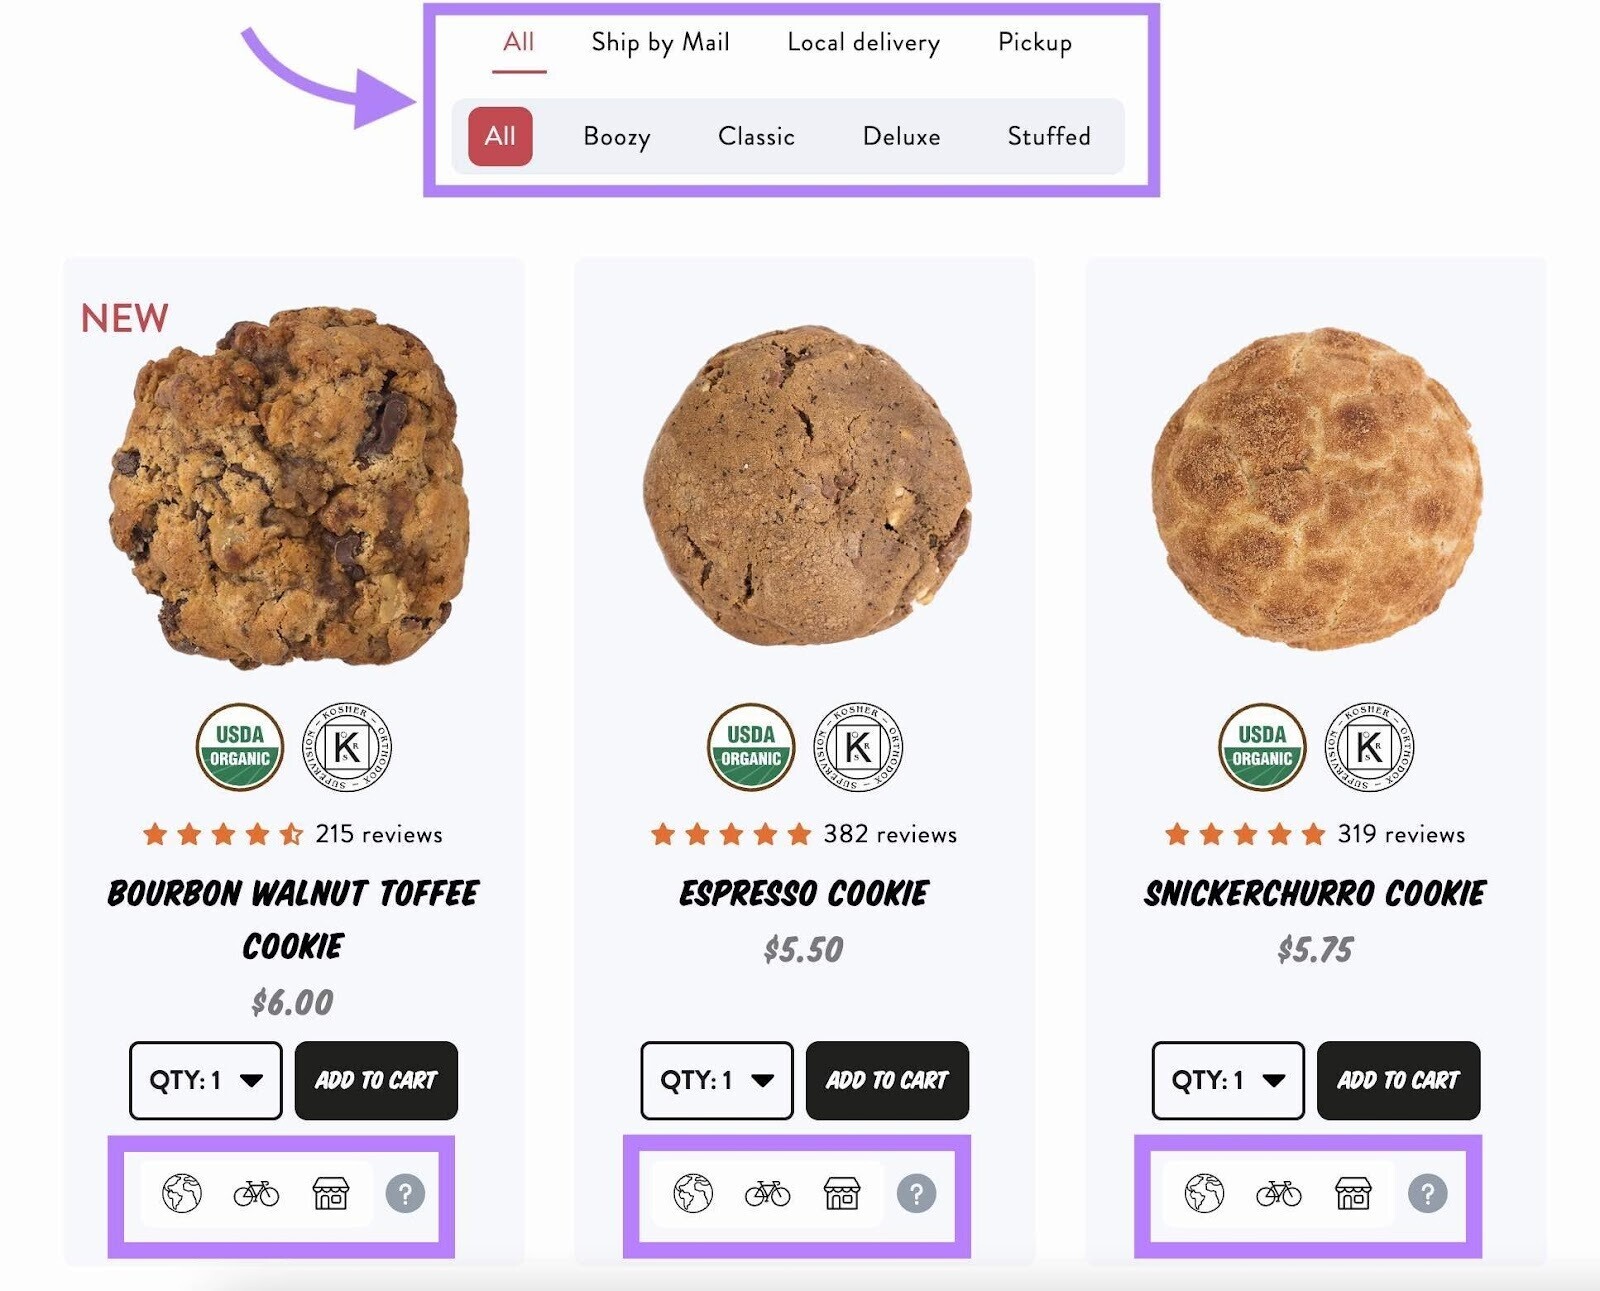 Bang Cookies’ user experience